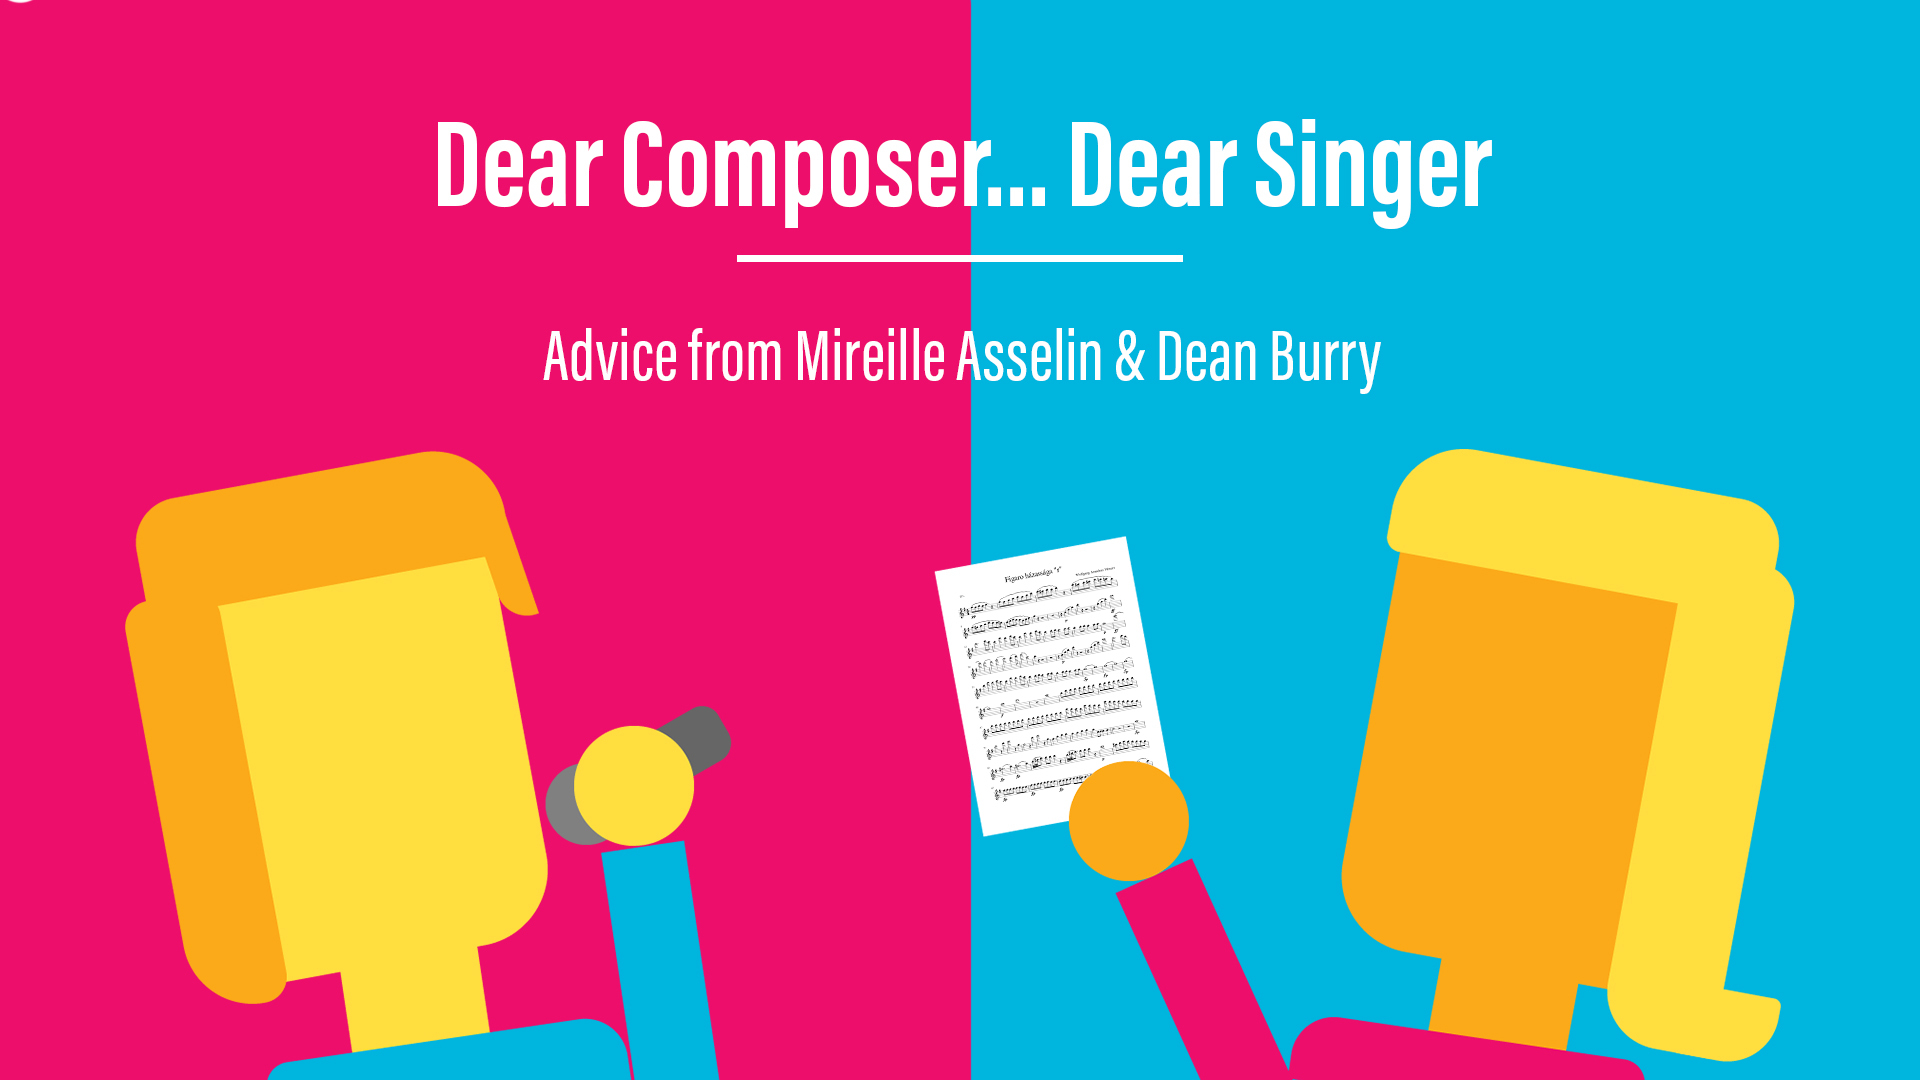 Dear composer dear singer